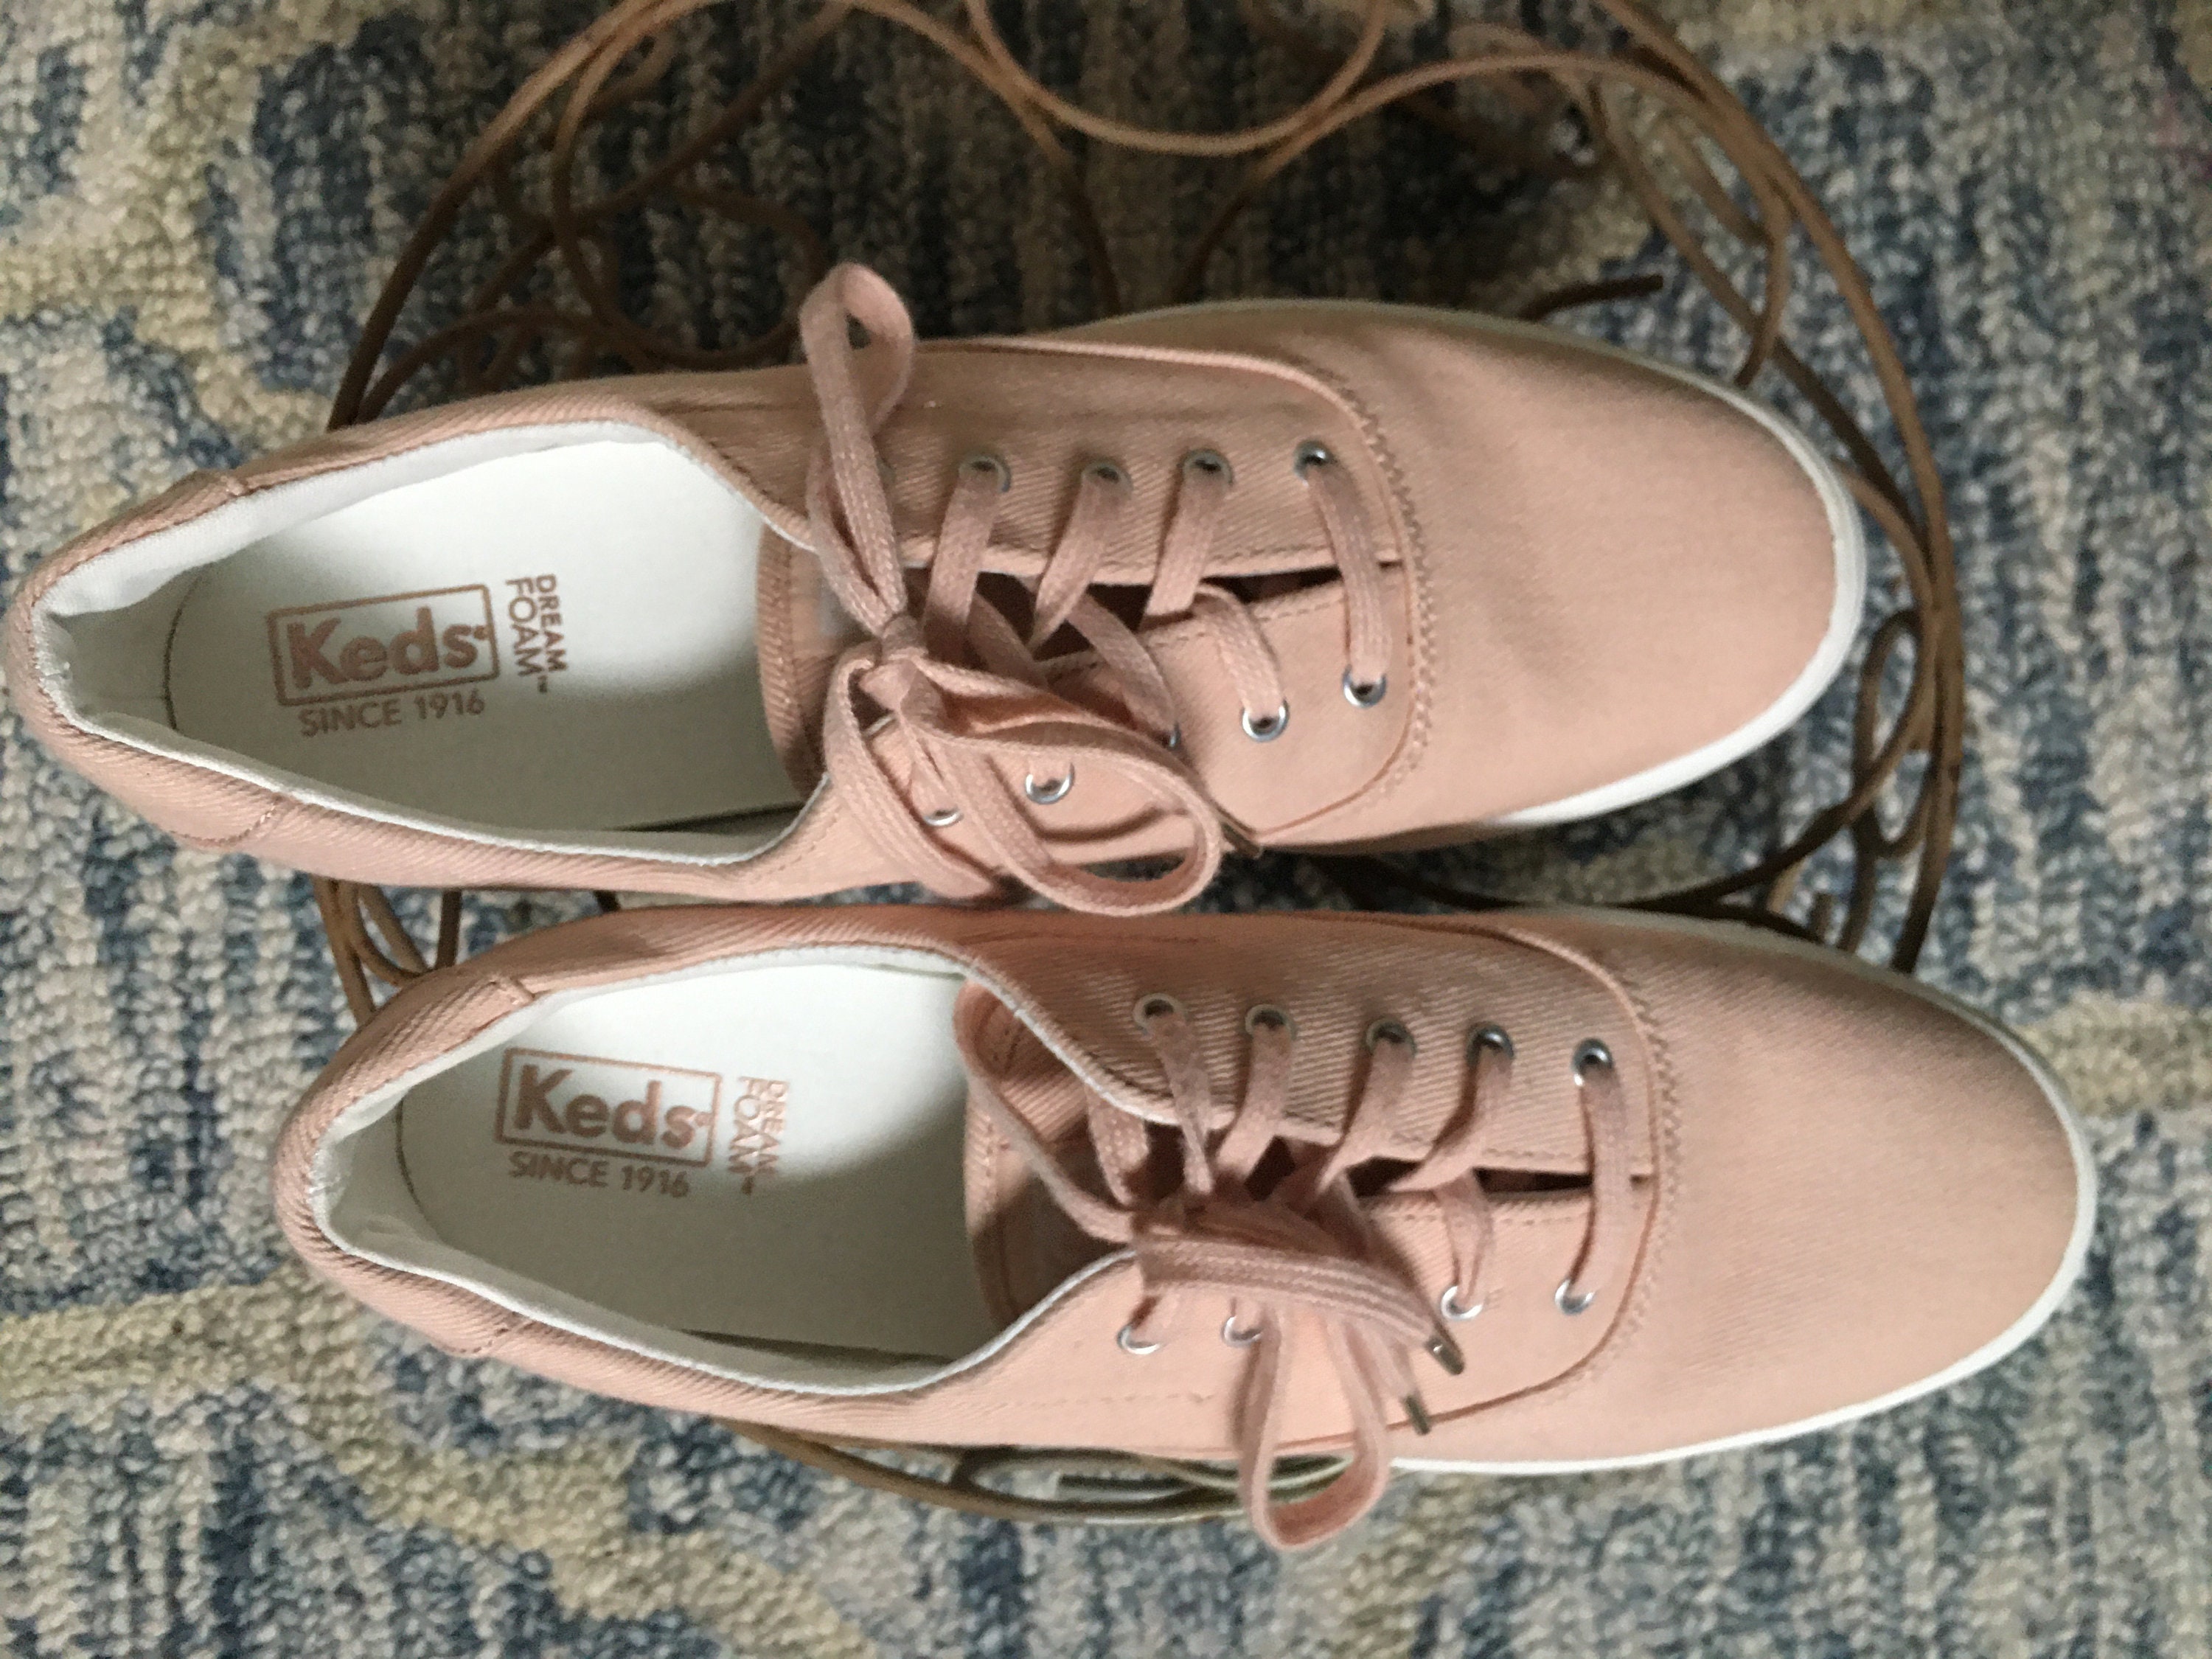 komen kanker bladzijde Keds Size 10 Dream Foam Sneakers/light Pink Lace up - Etsy